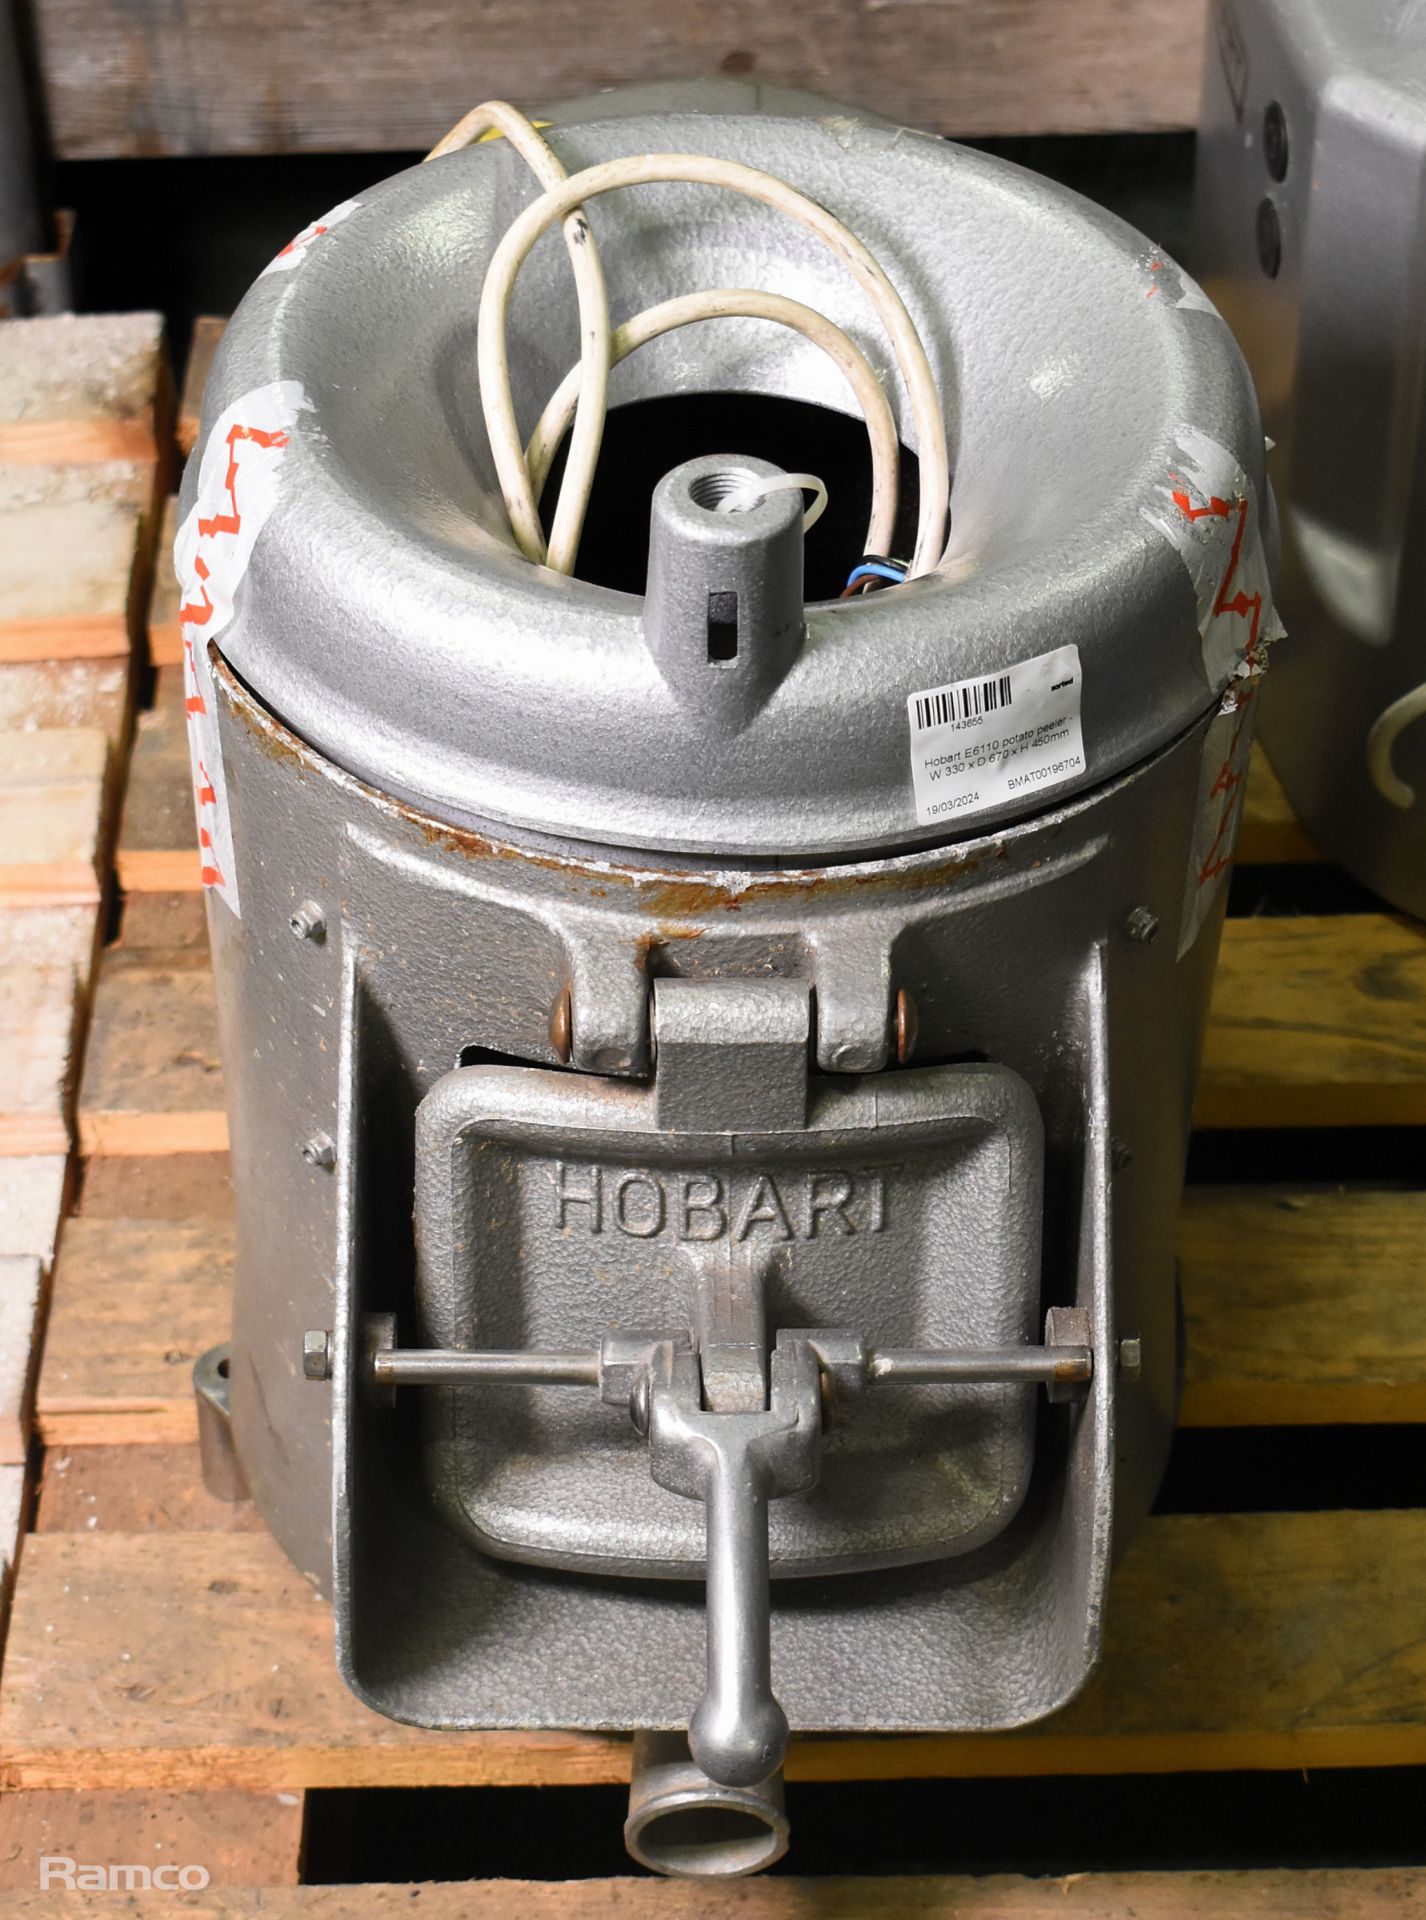 Hobart E6110 potato peeler - W 330 x D 670 x H 450mm - Image 5 of 7